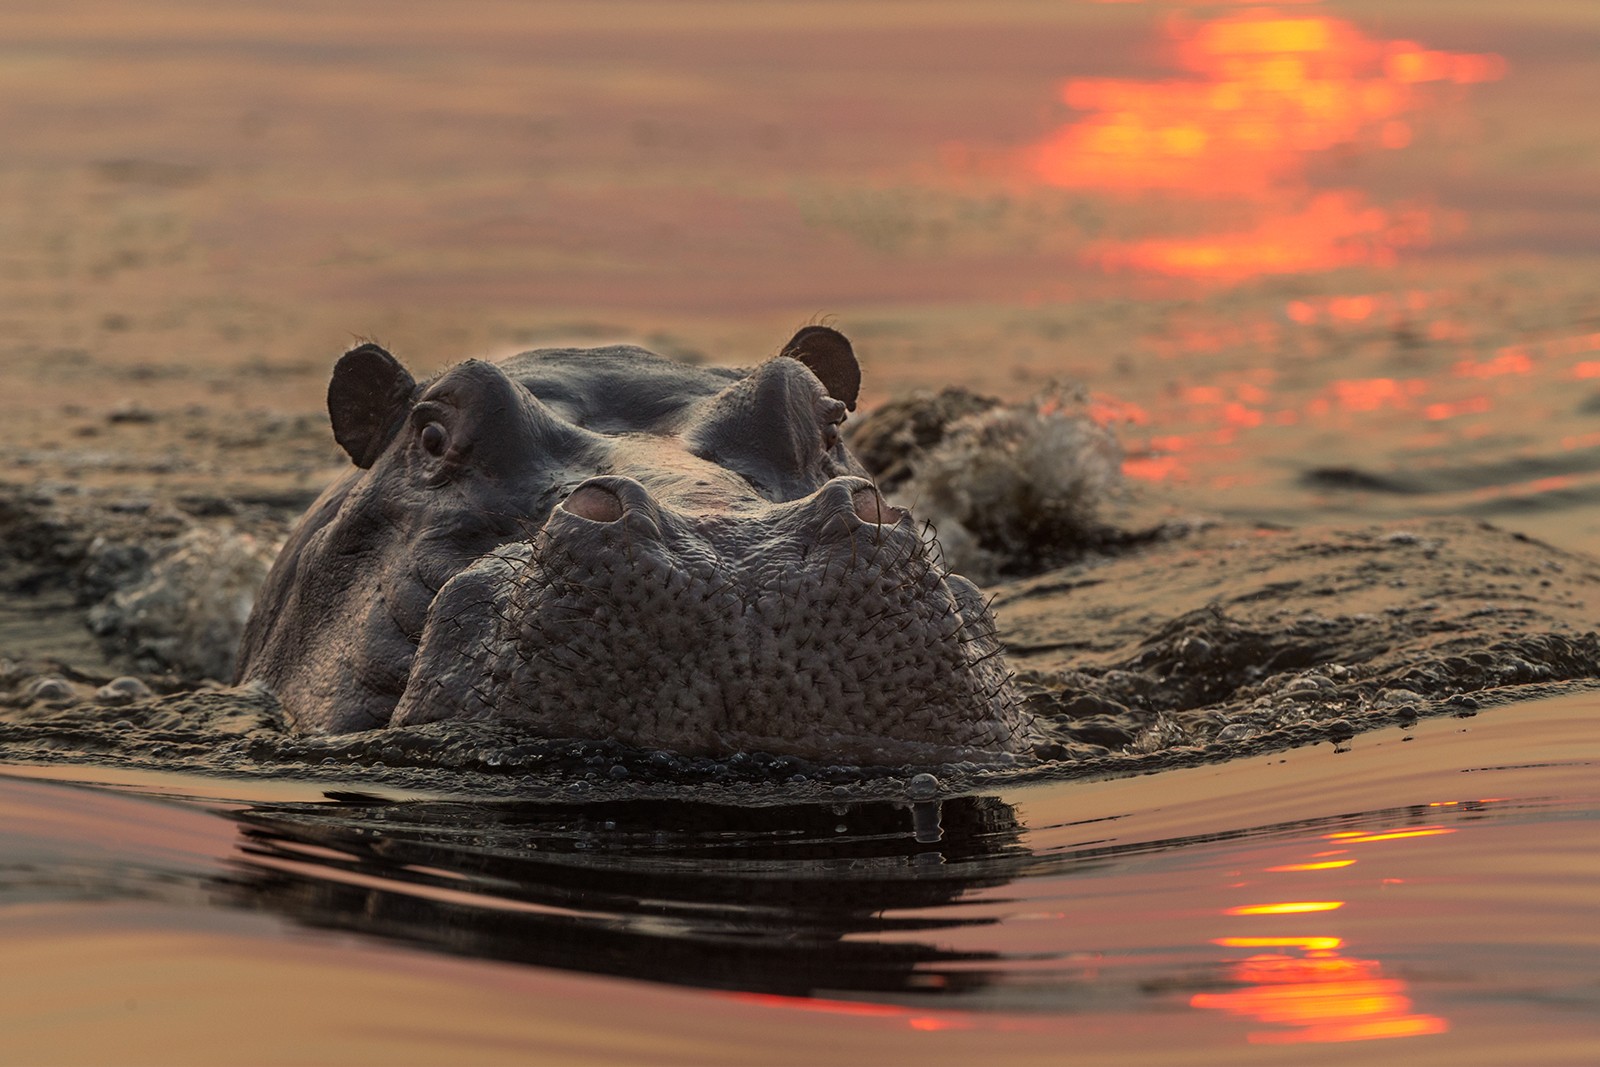 nijlpaard sunset.jpg